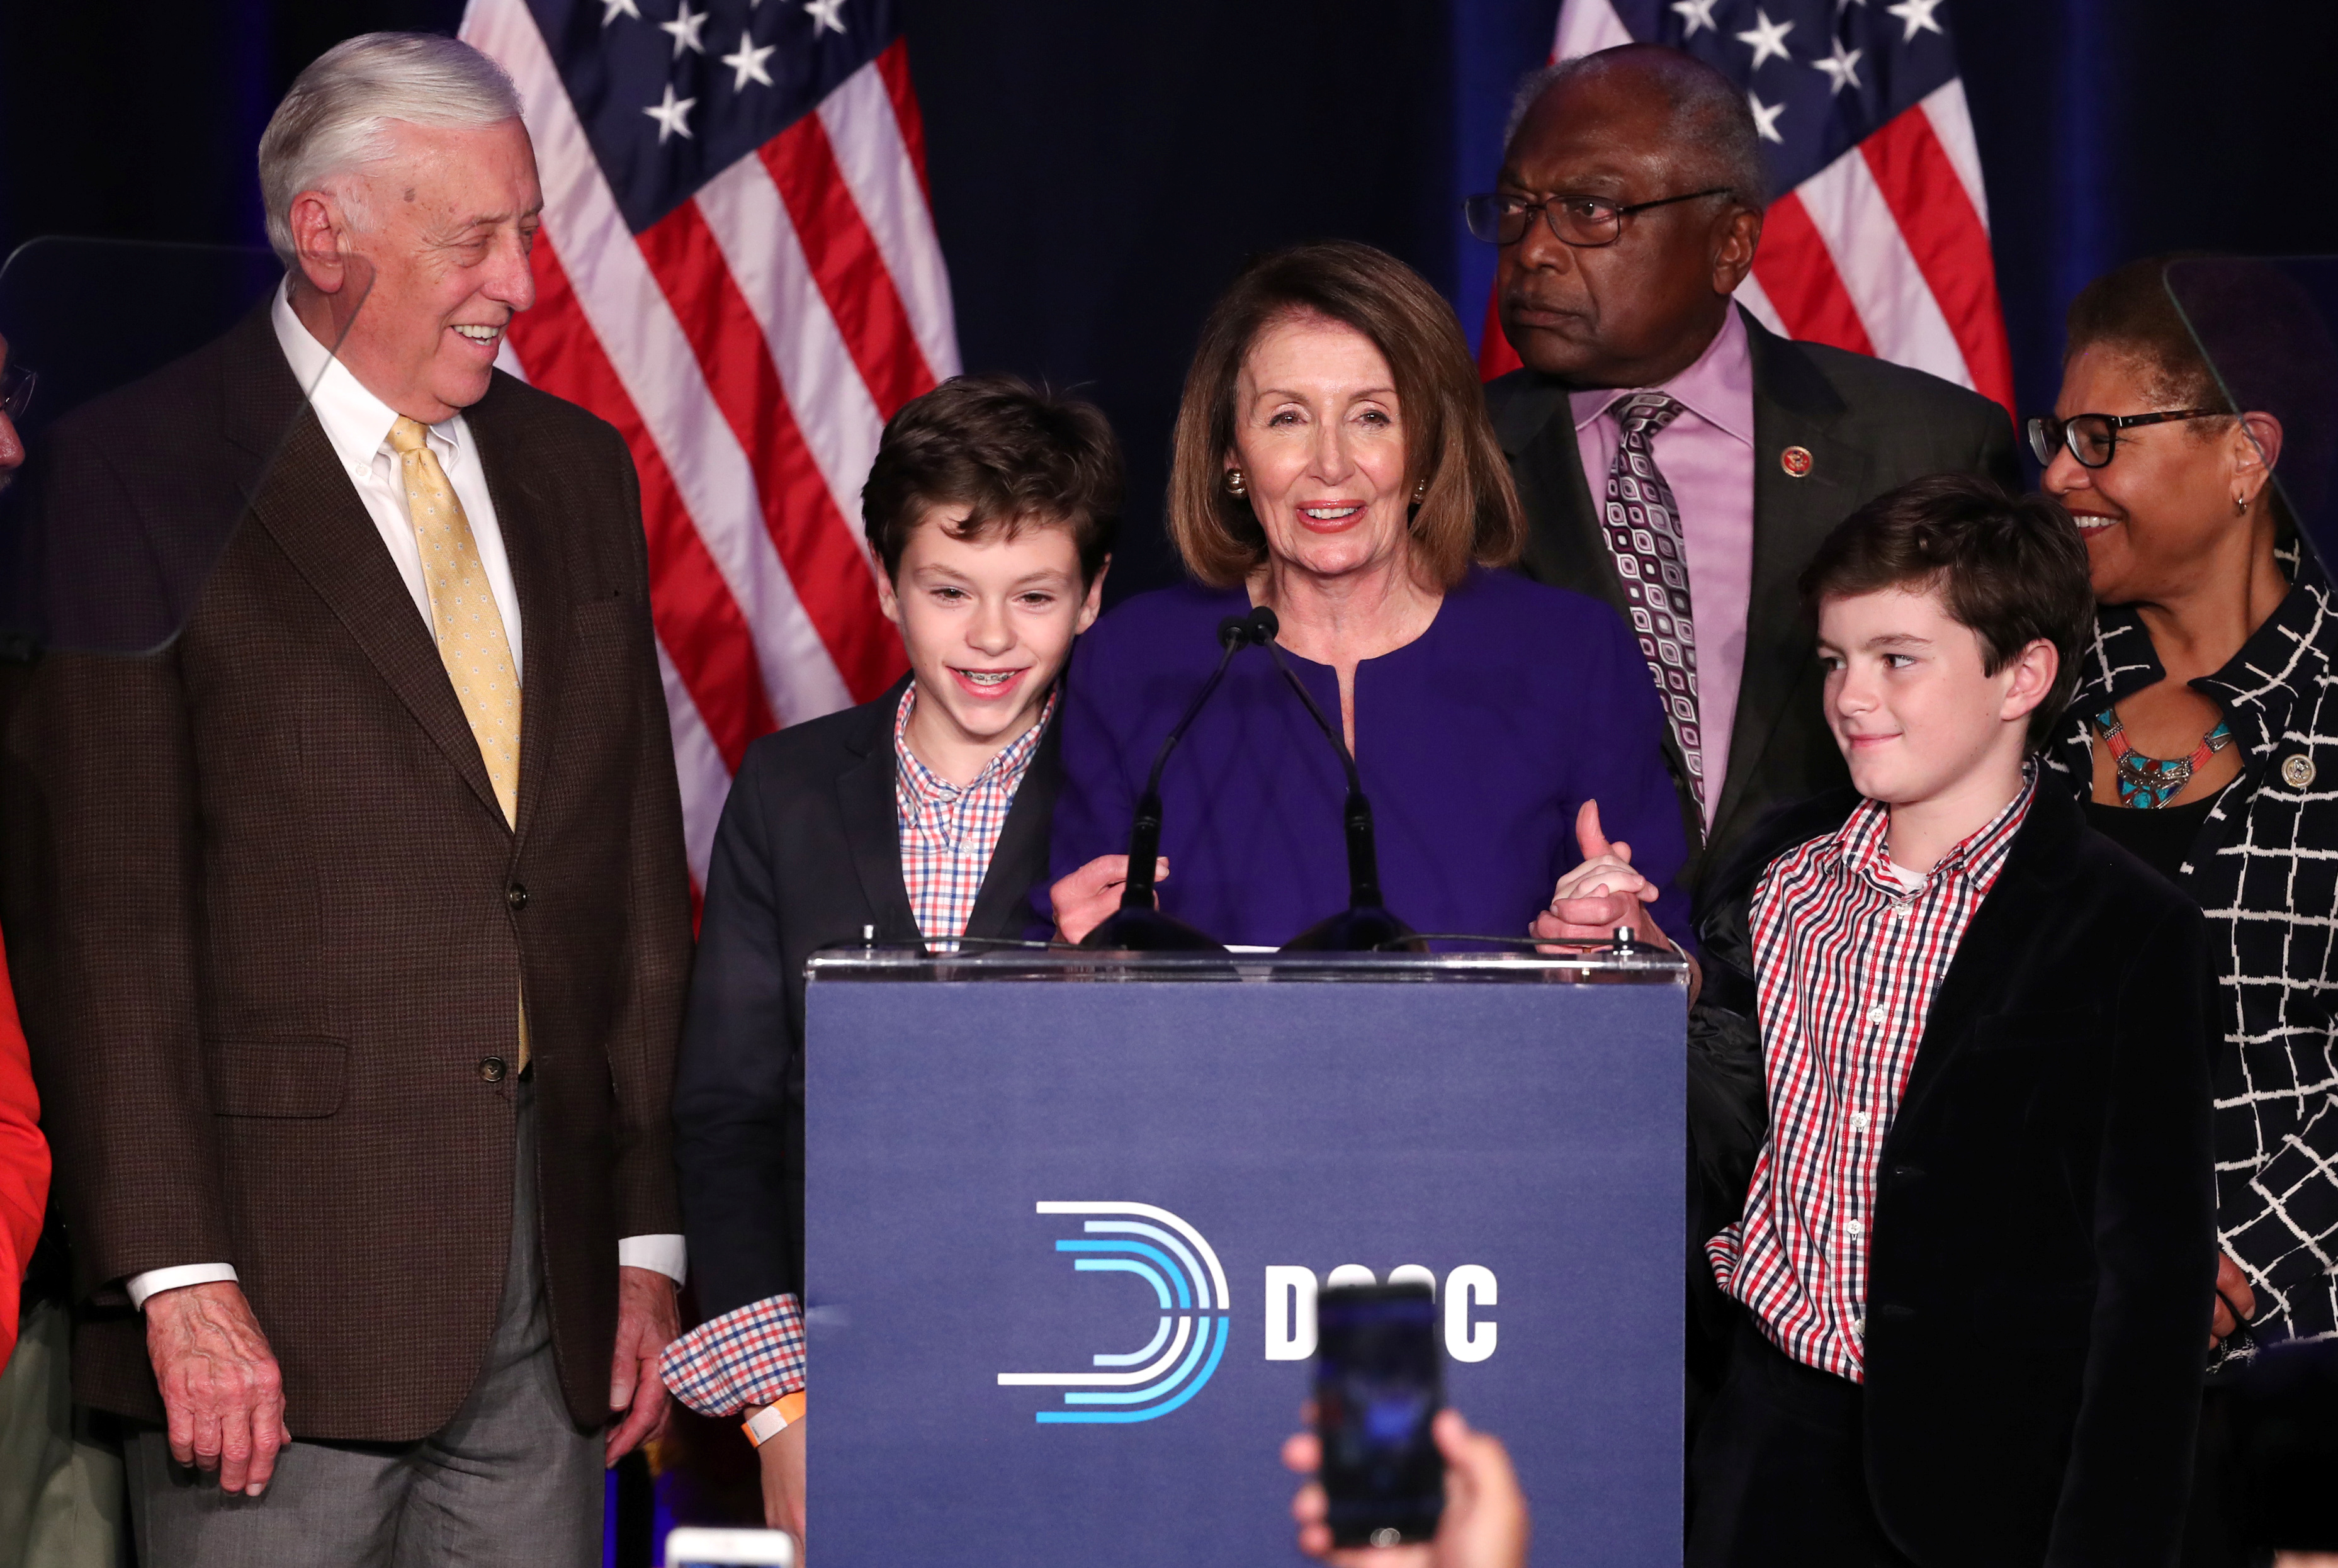 U.S. House Minority Leader Nancy Pelosi celebrates Democrats winning House majority in Washington